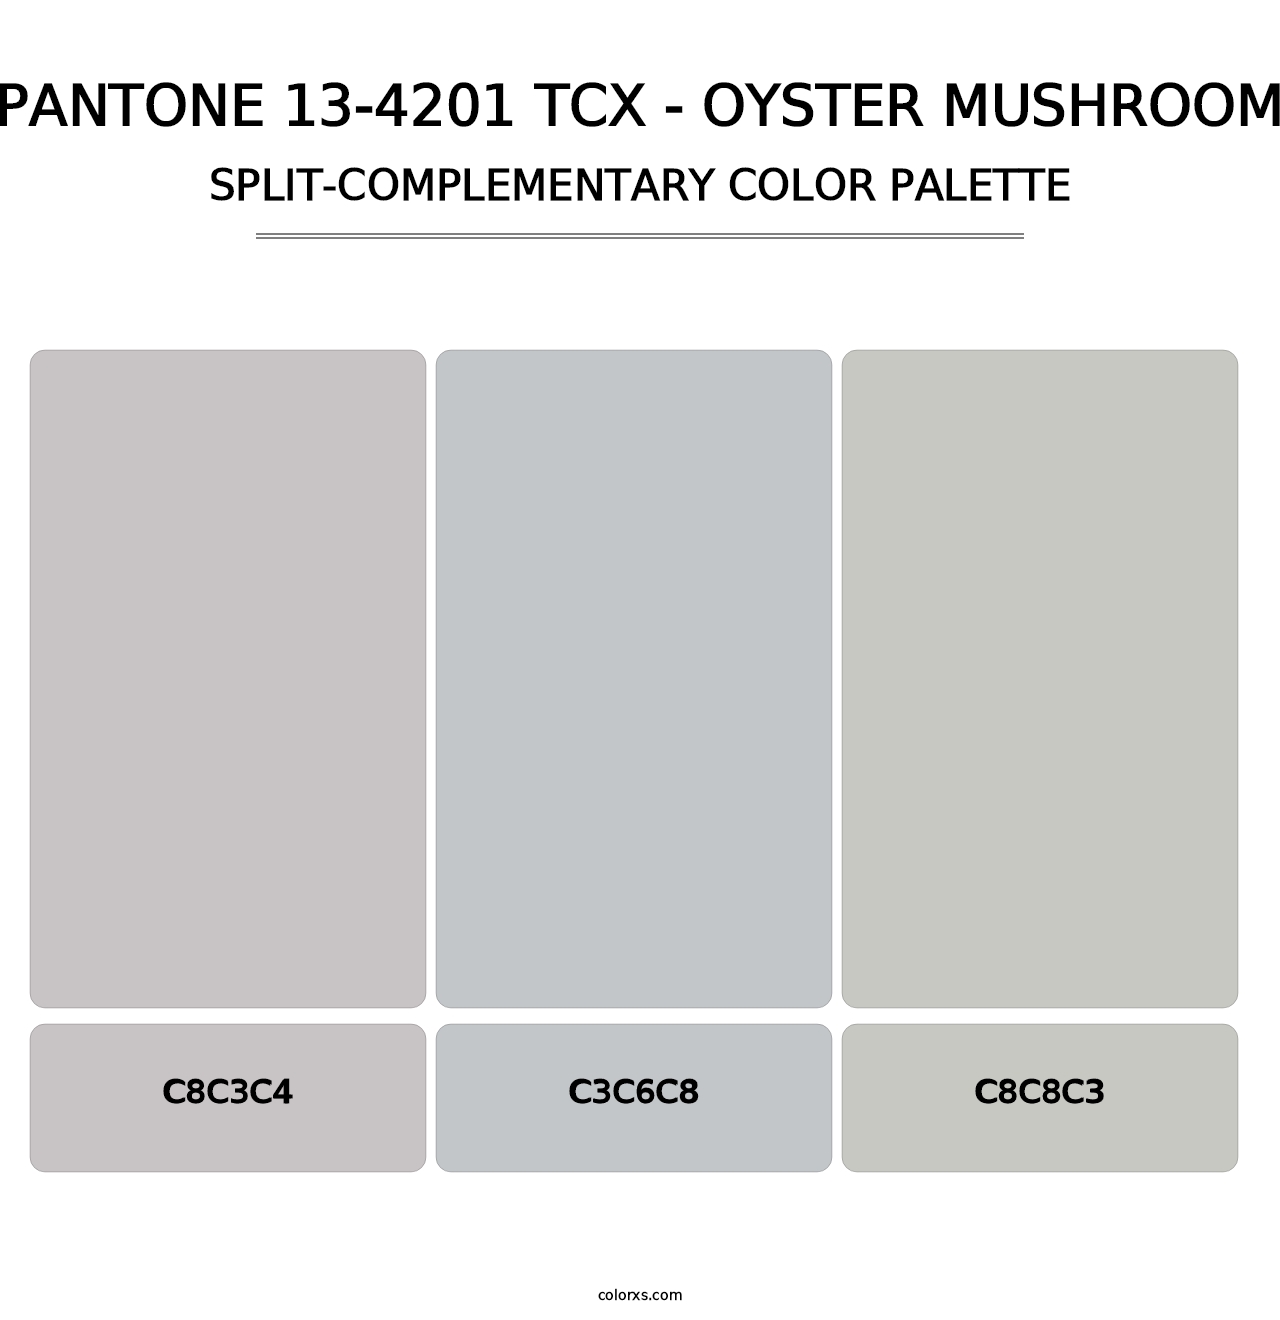 PANTONE 13-4201 TCX - Oyster Mushroom - Split-Complementary Color Palette